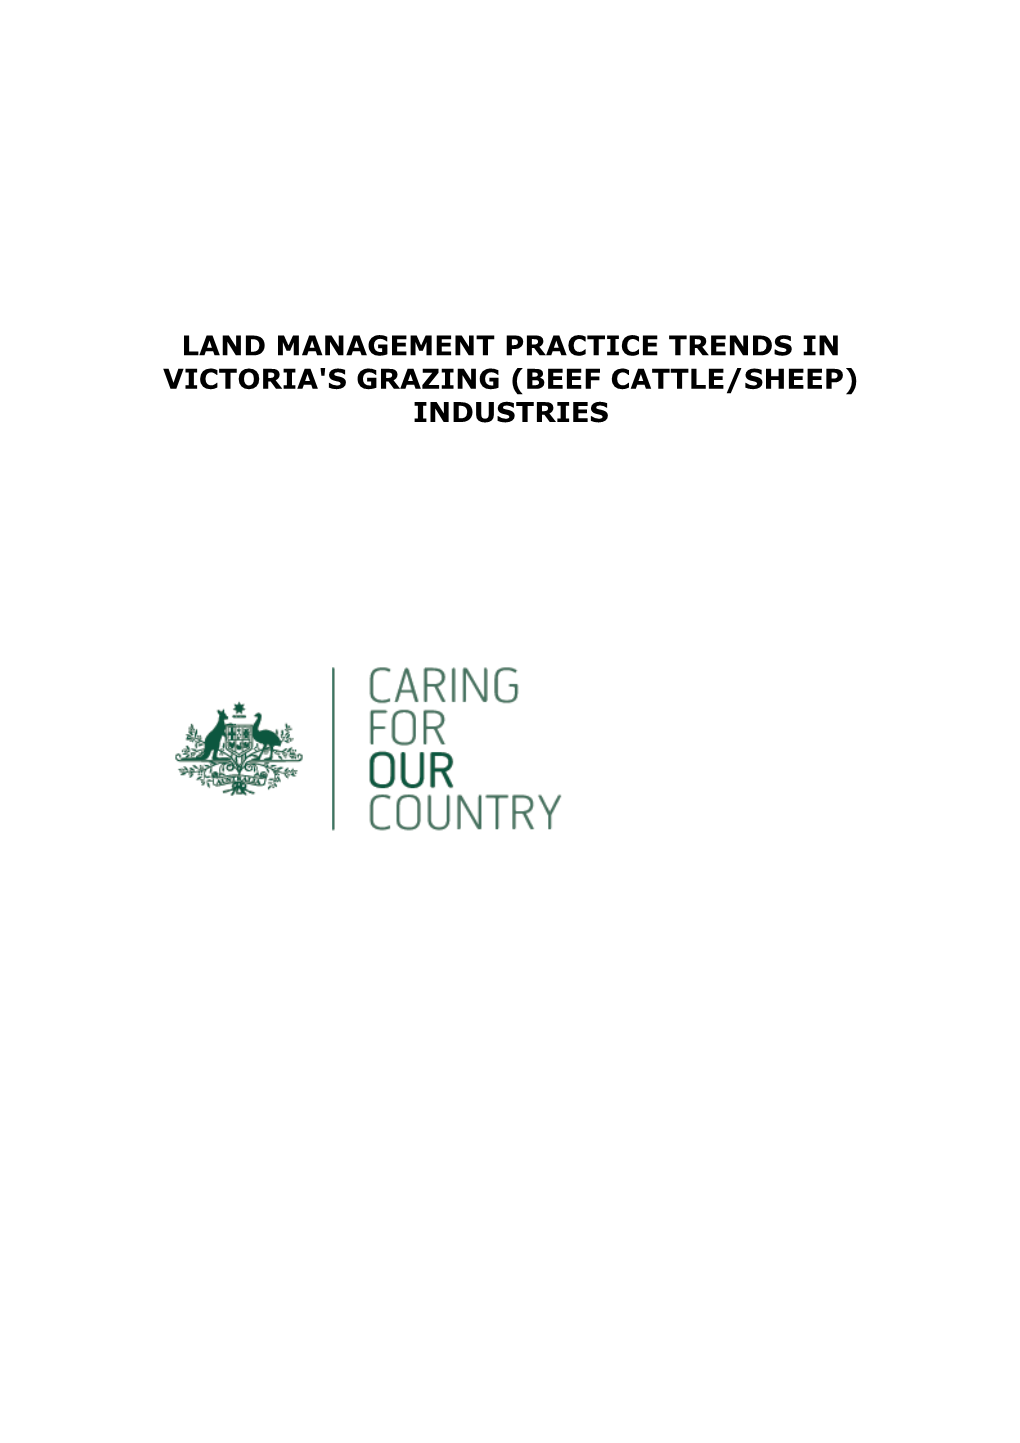 Land Management Practice Trends in Victoria's Grazing (Beef Cattle/Sheep) Industries